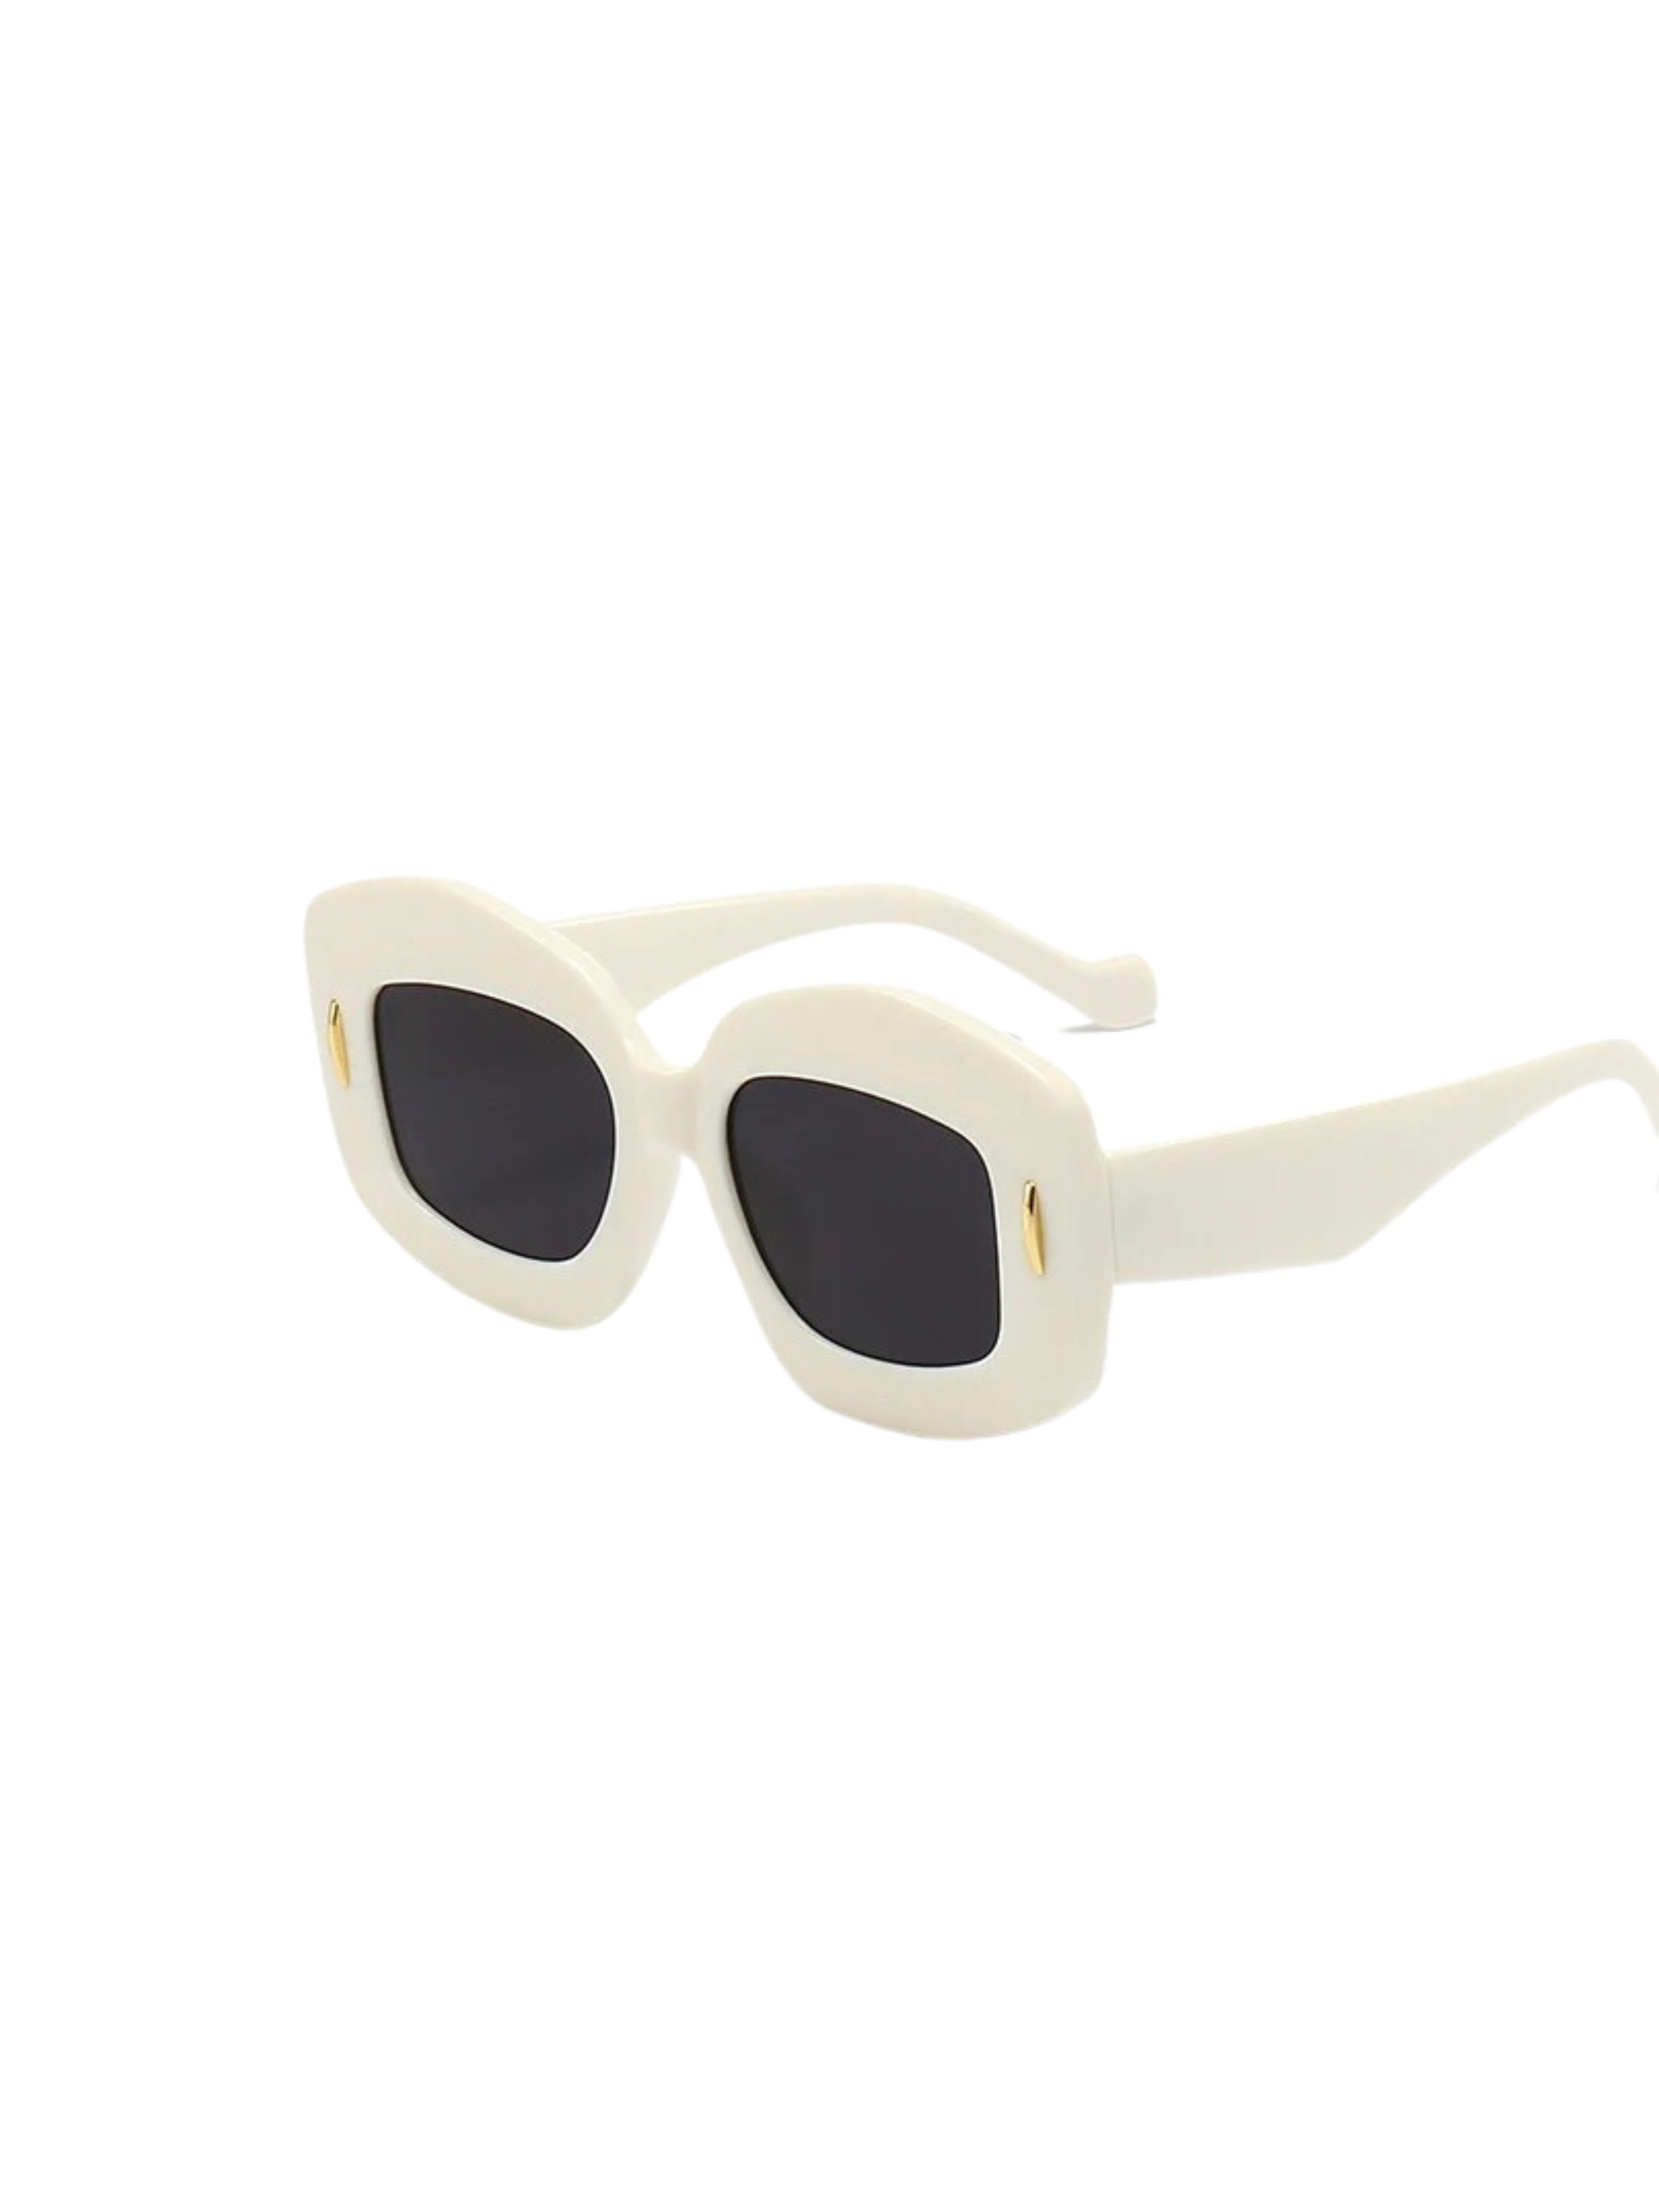 GOLDxTEAL stylish beige frame sunglasses.